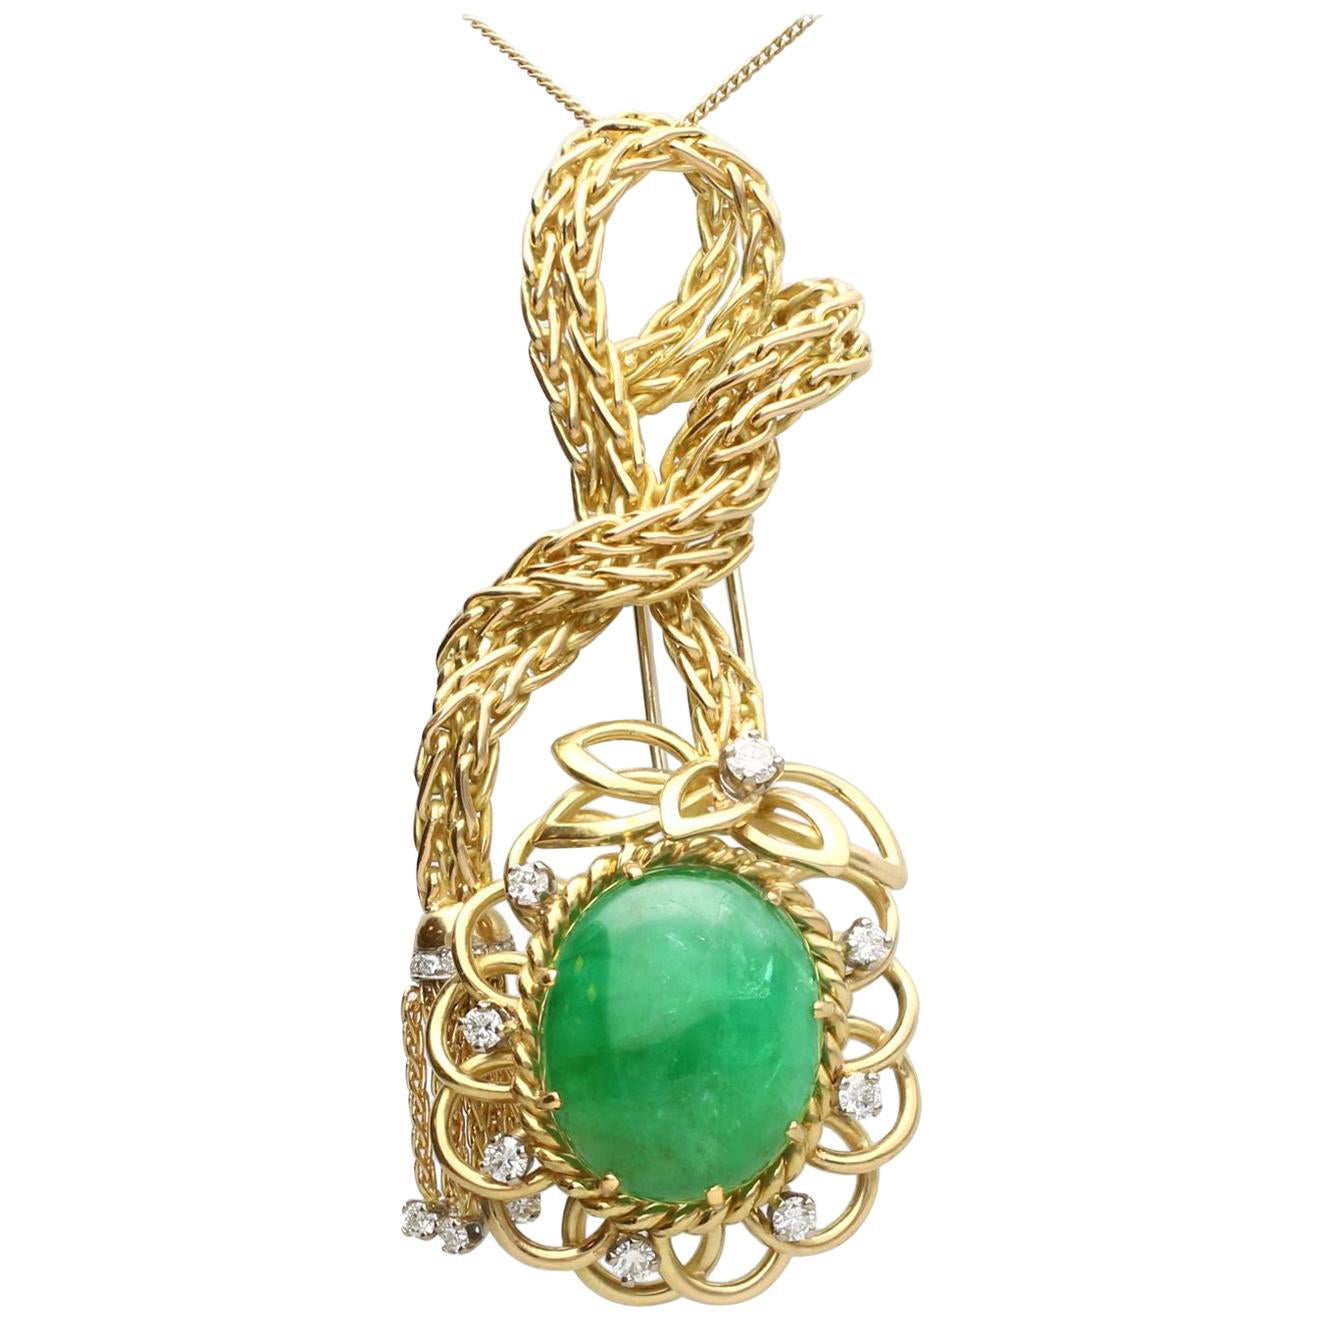 26.16 Carat Emerald and Diamond Yellow Gold Brooch Pendant